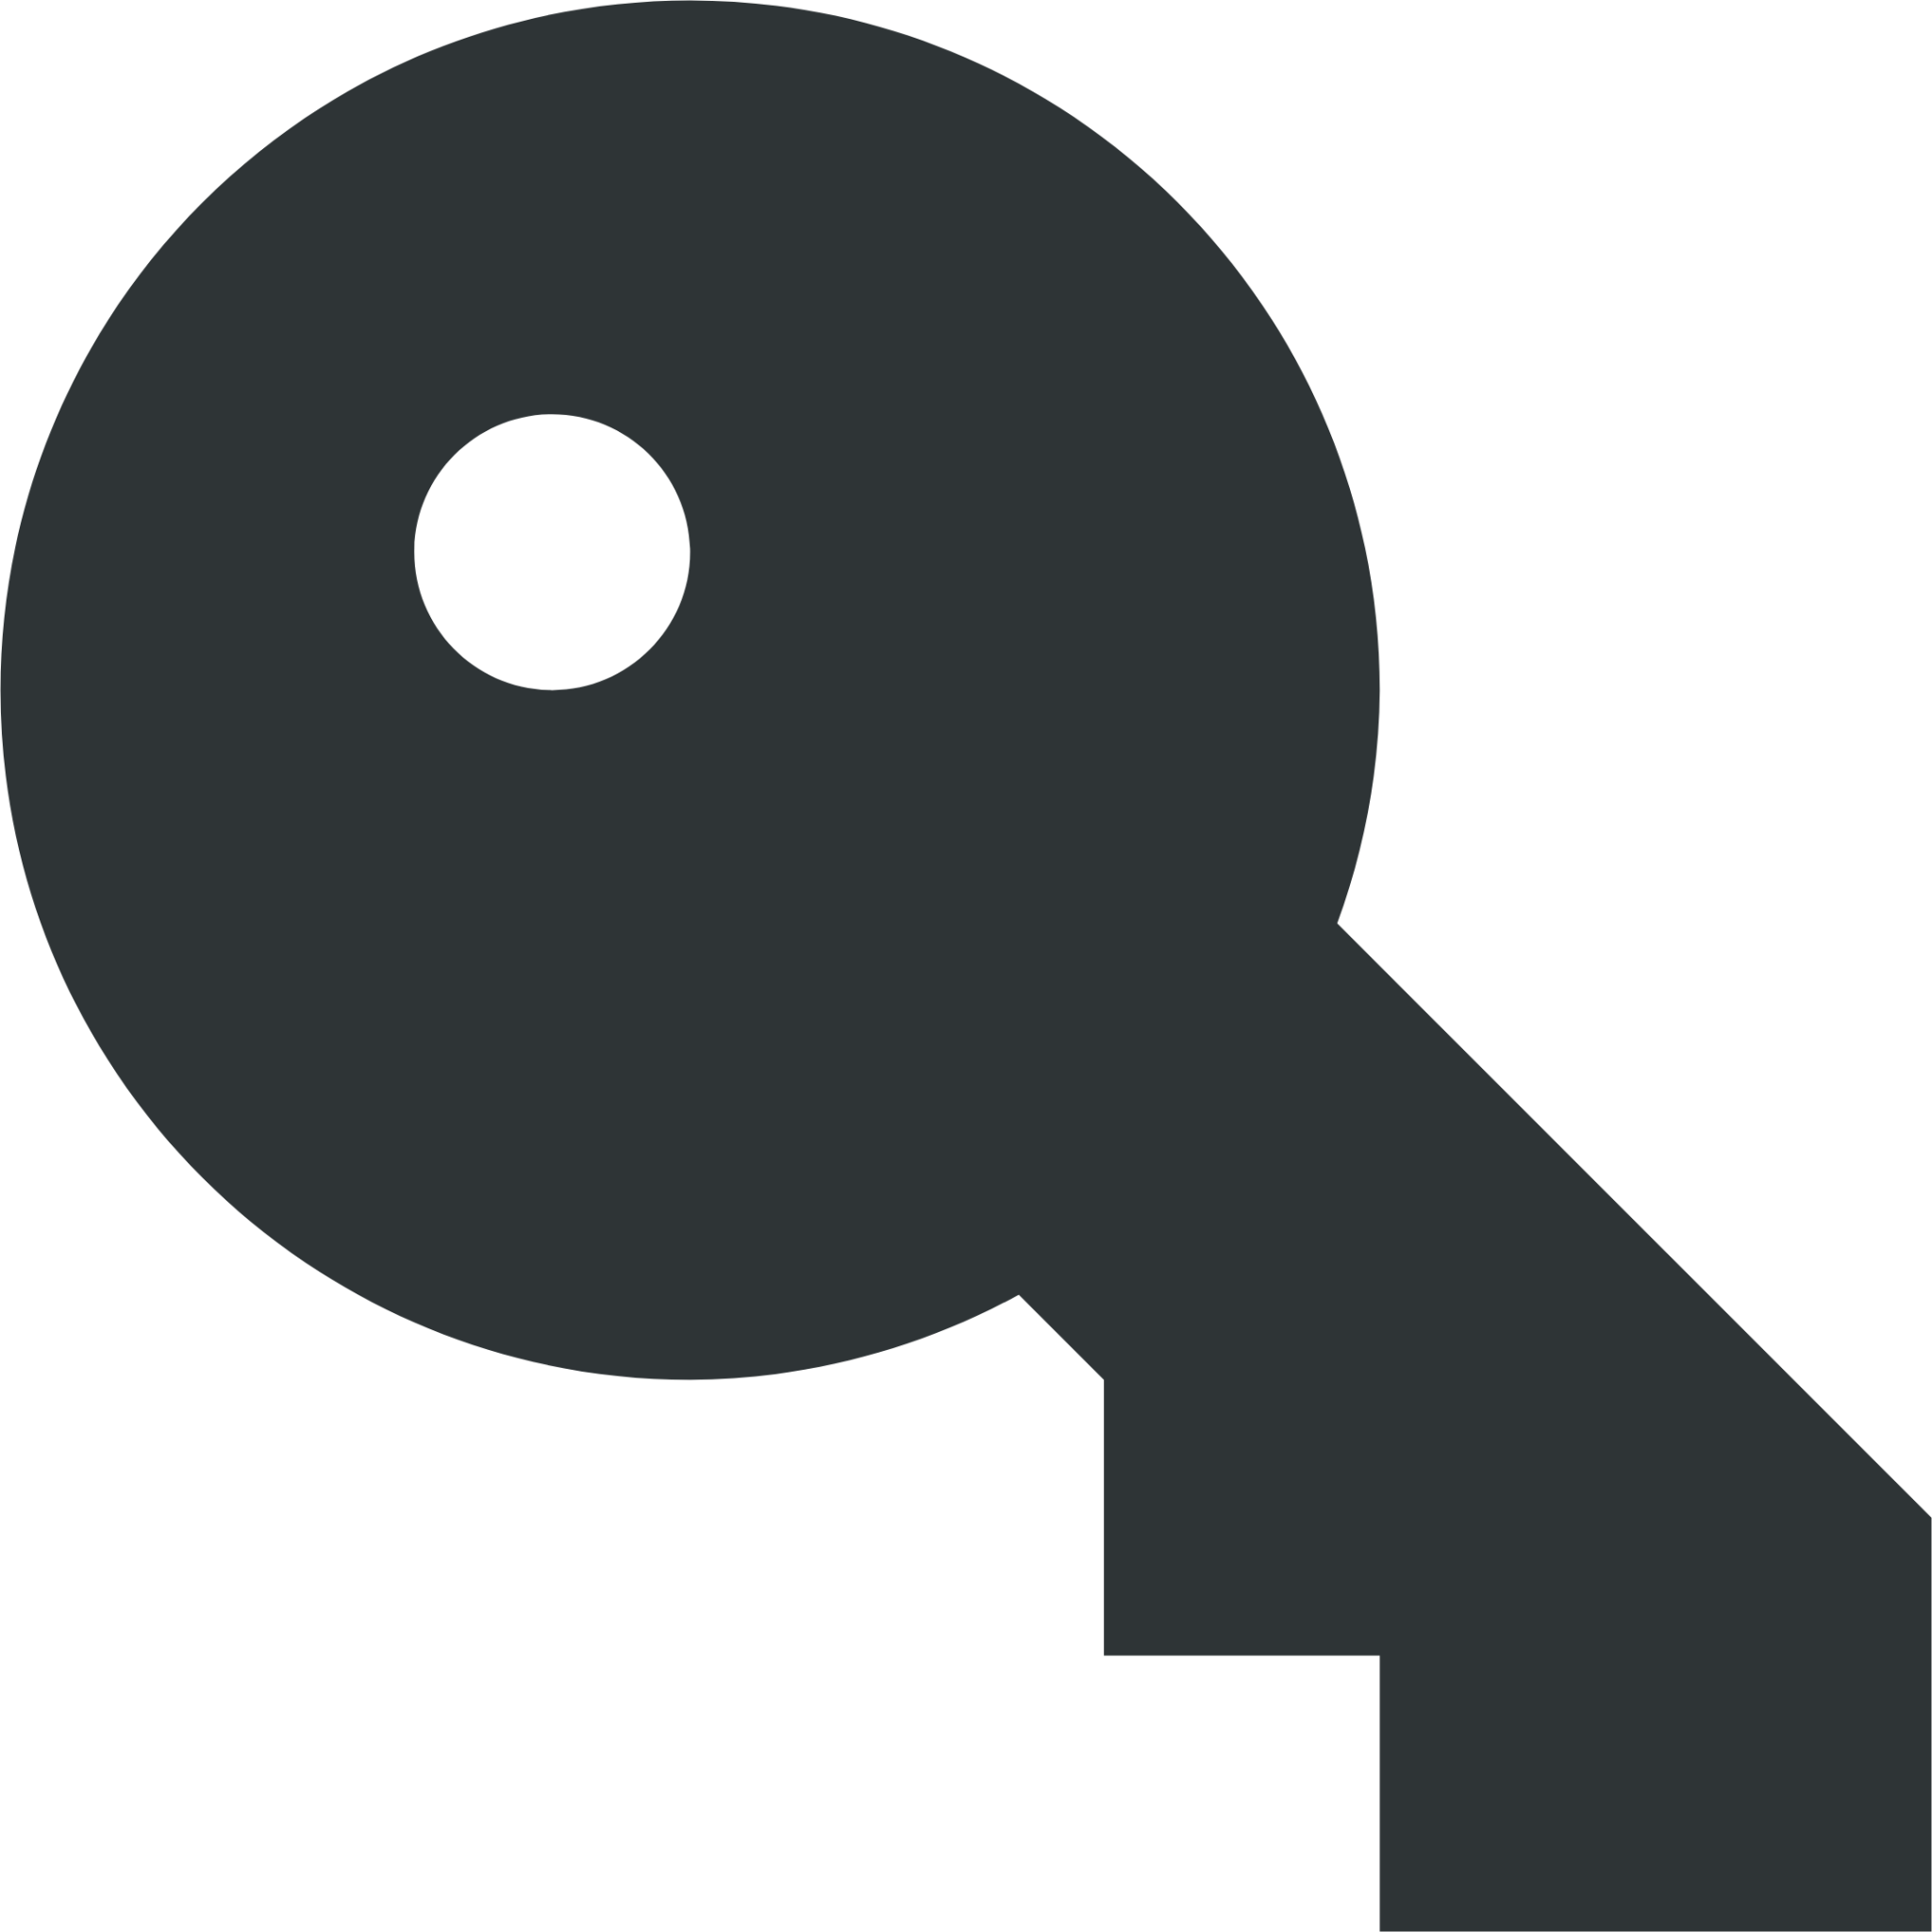 dialog password symbolic icon